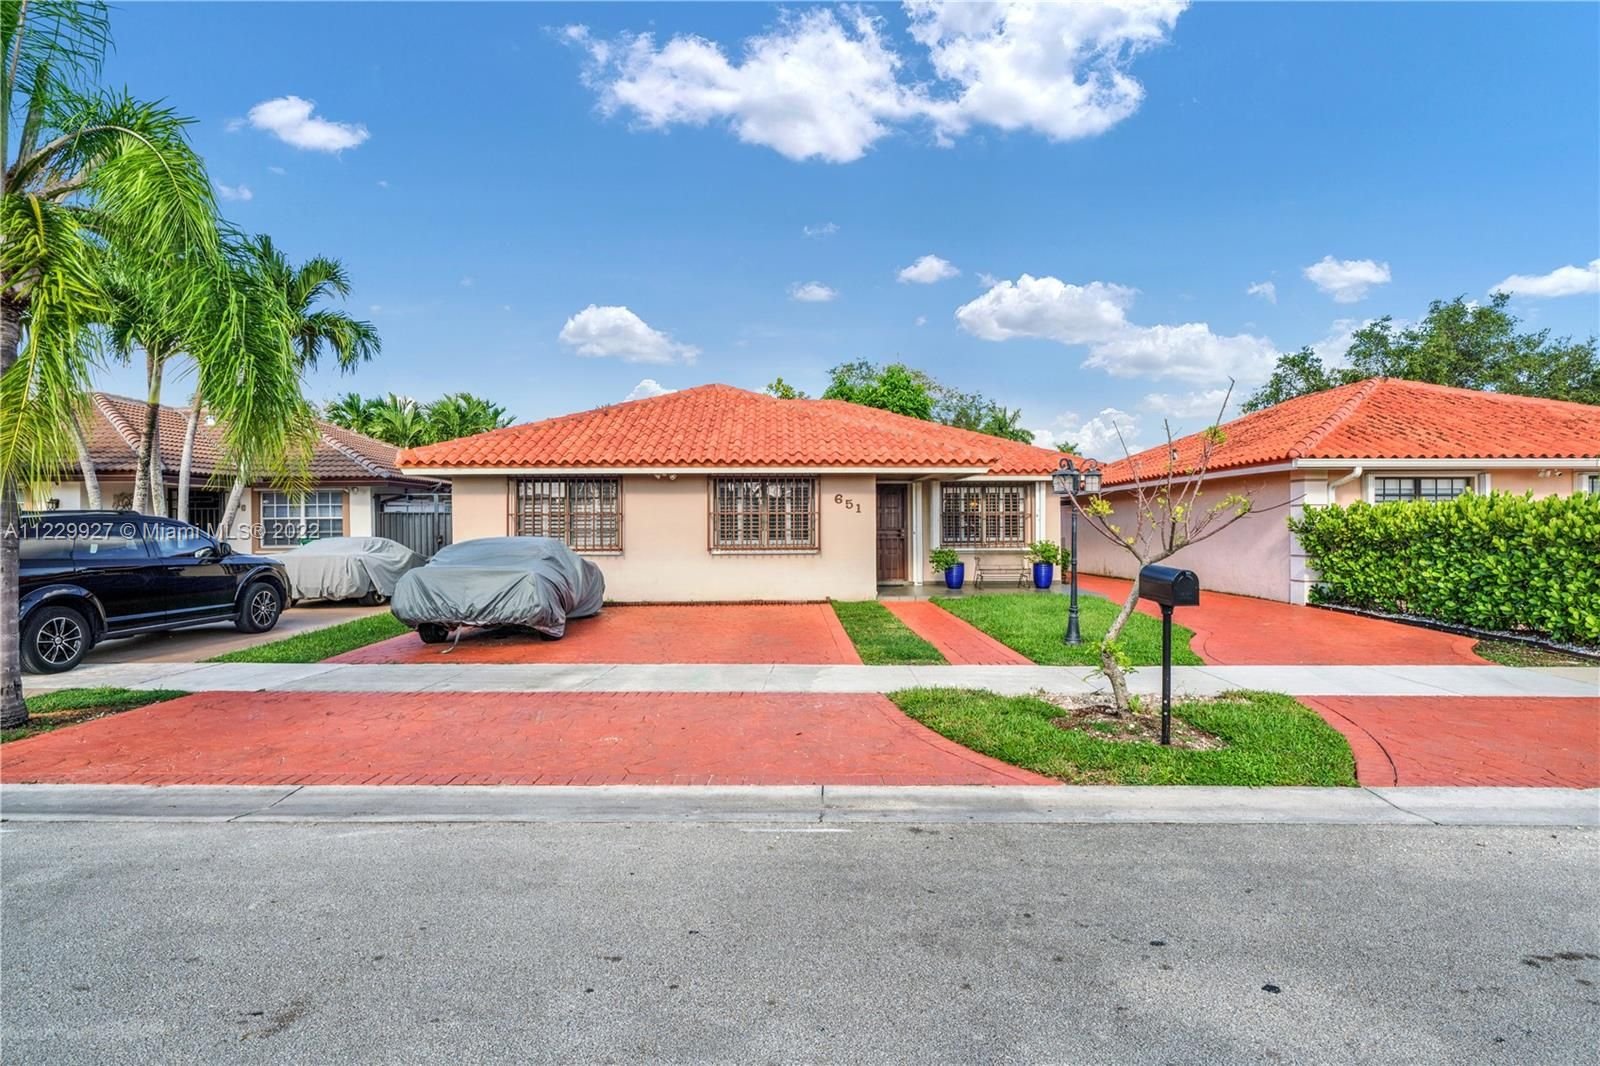 Real estate property located at 651 132 Pl, Miami-Dade County, Miami, FL